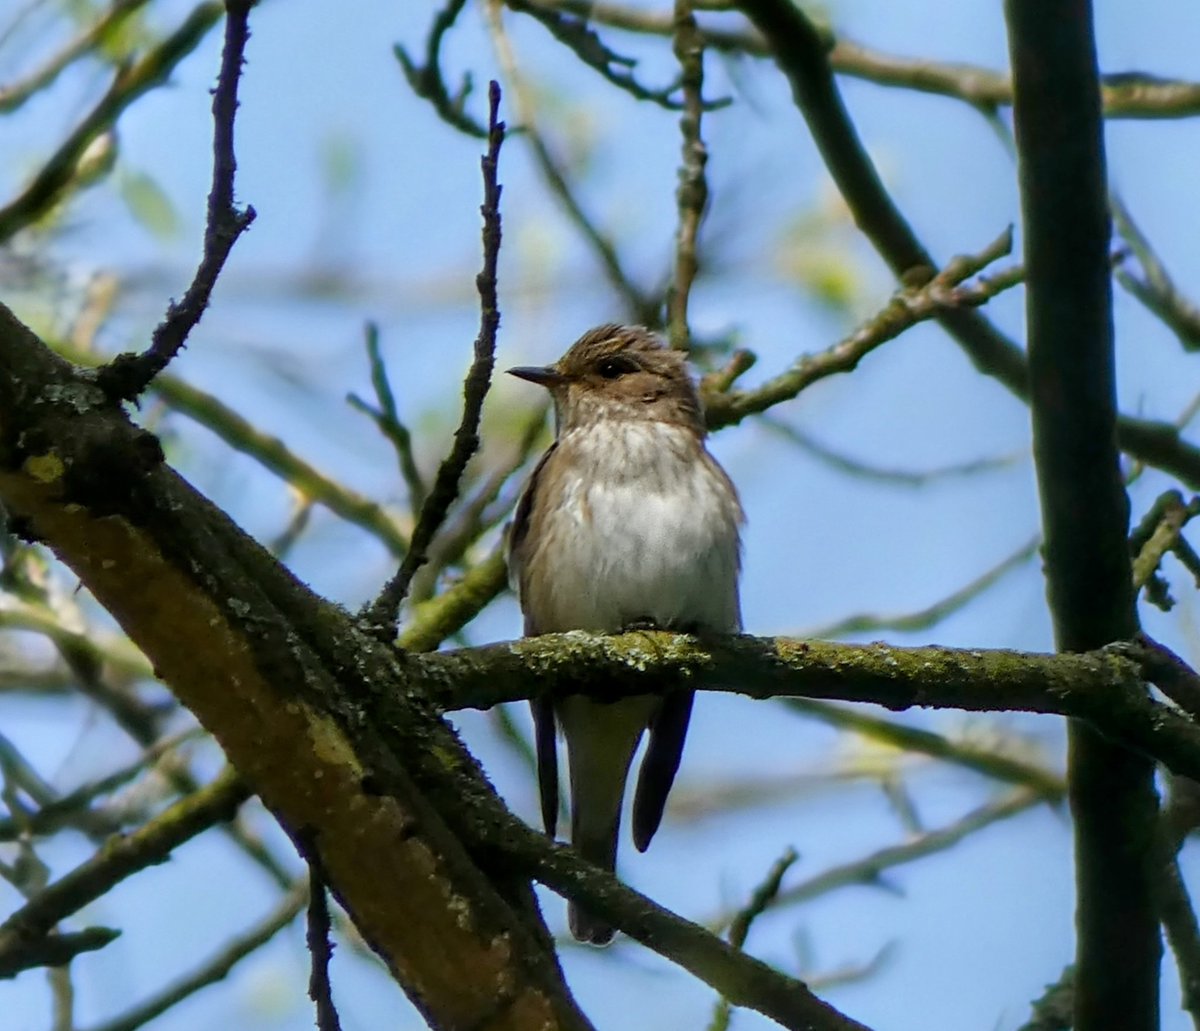 Spotted Flycatcher seen today at private Bucks site,2 birds present.Seen with @sh4rpy and @Hertsbirder 
@bucksalert 
@bucksbirdnews